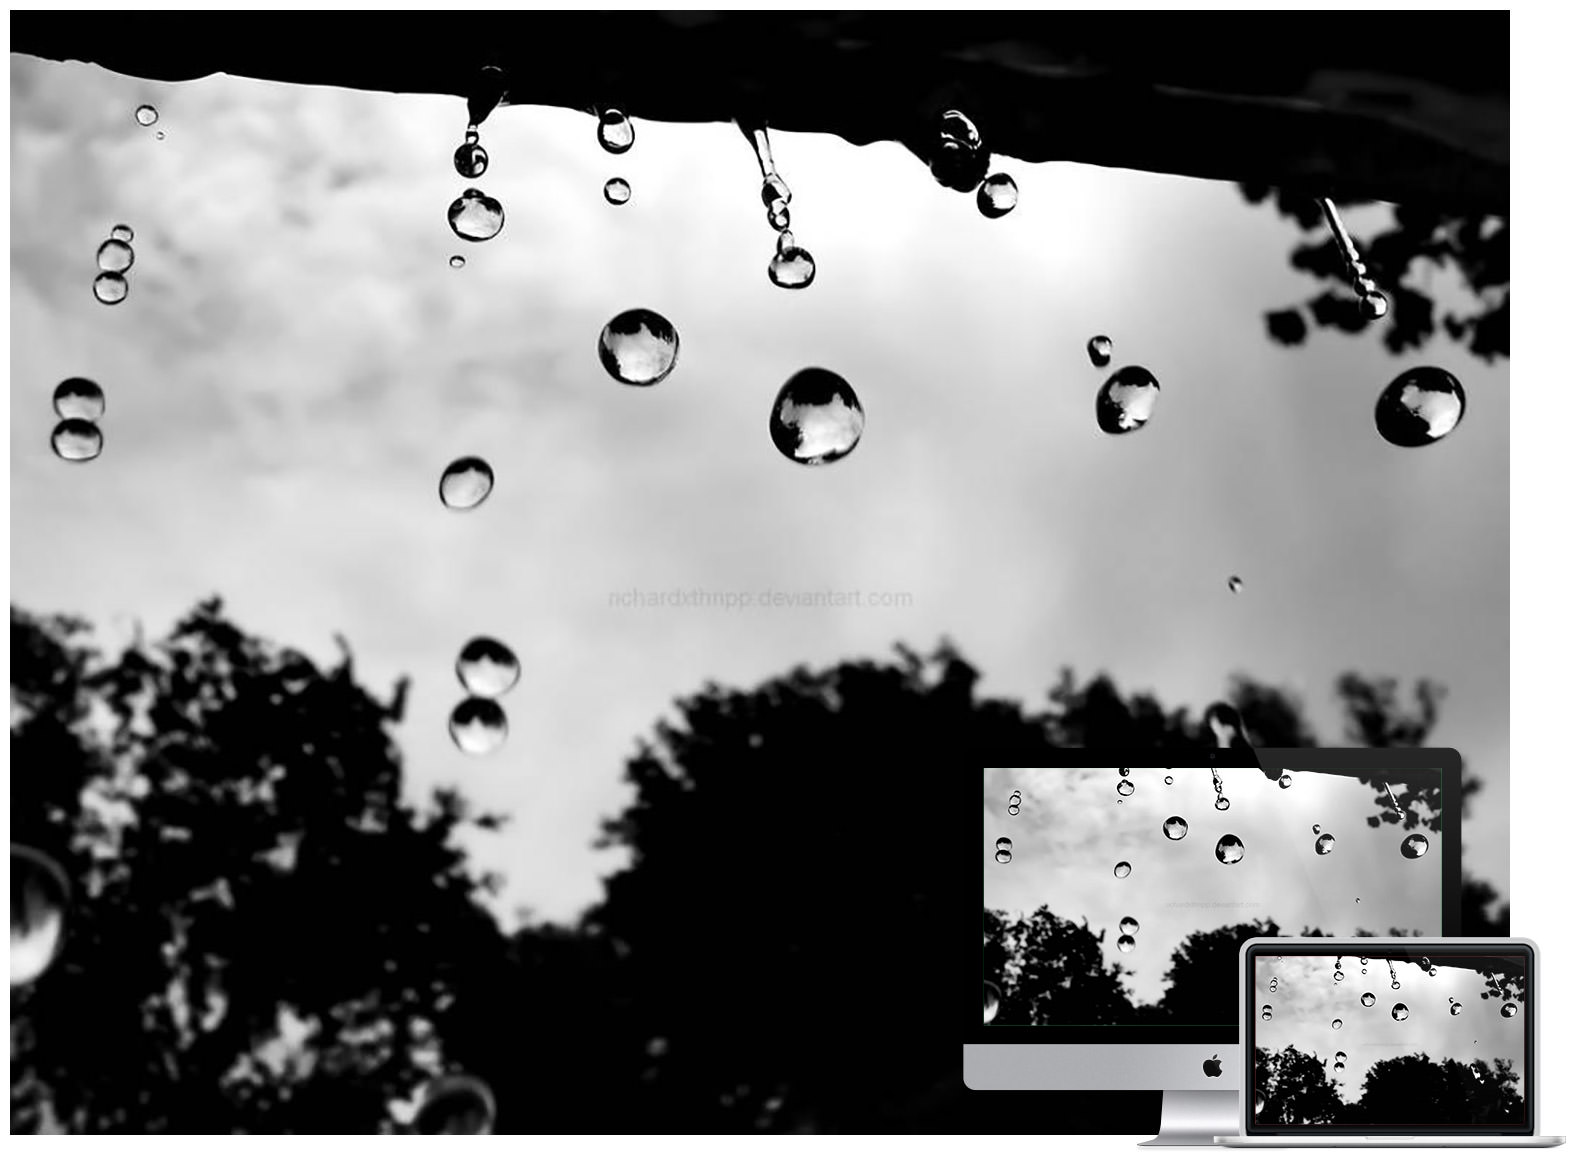 Raindrop Wallpapers - Raindrops Falling , HD Wallpaper & Backgrounds